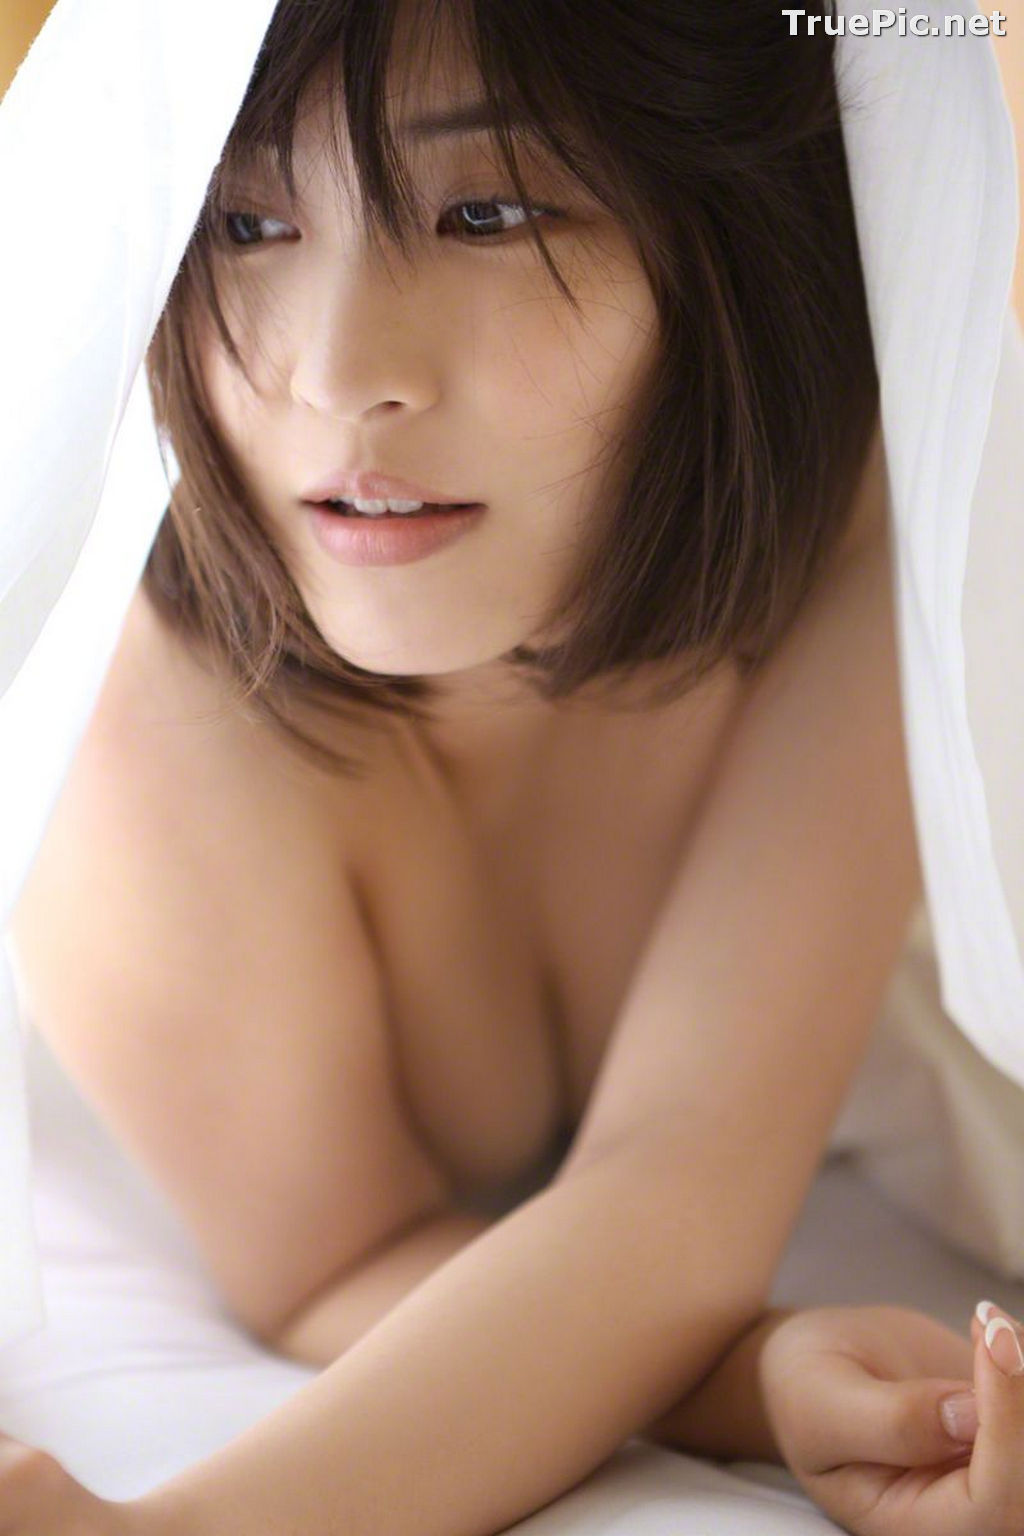 Image Wanibooks NO.122 - Japanese Gravure Idol and Actress - Asuka Kishi - TruePic.net - Picture-211